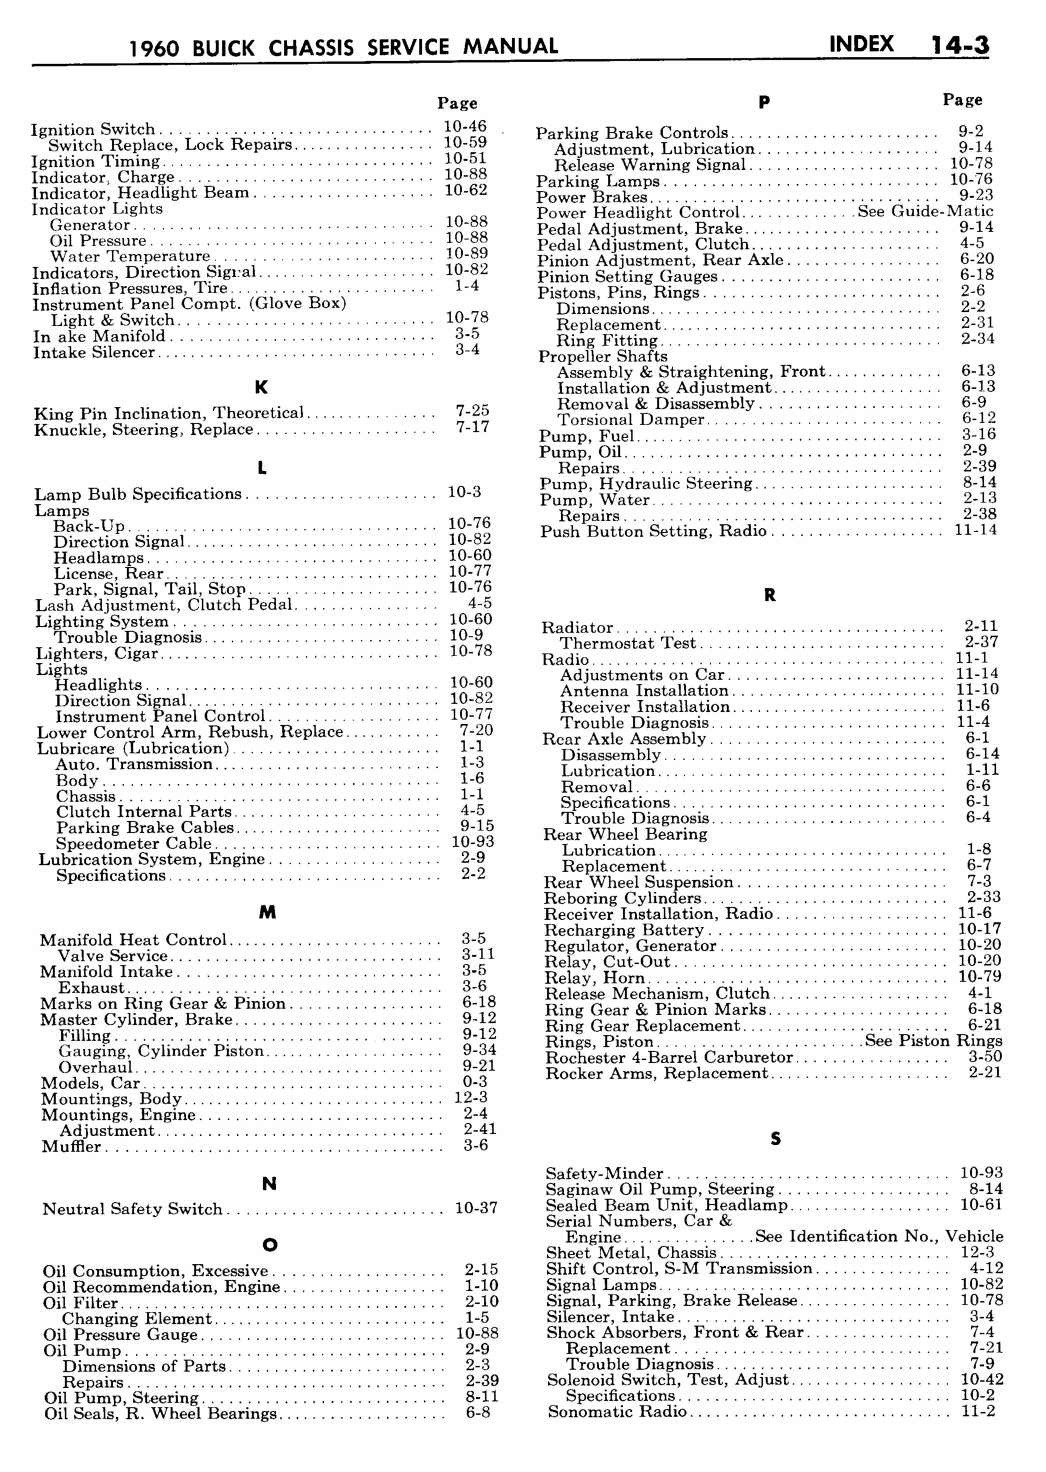 n_14 1960 Buick Shop Manual - Index-003-003.jpg